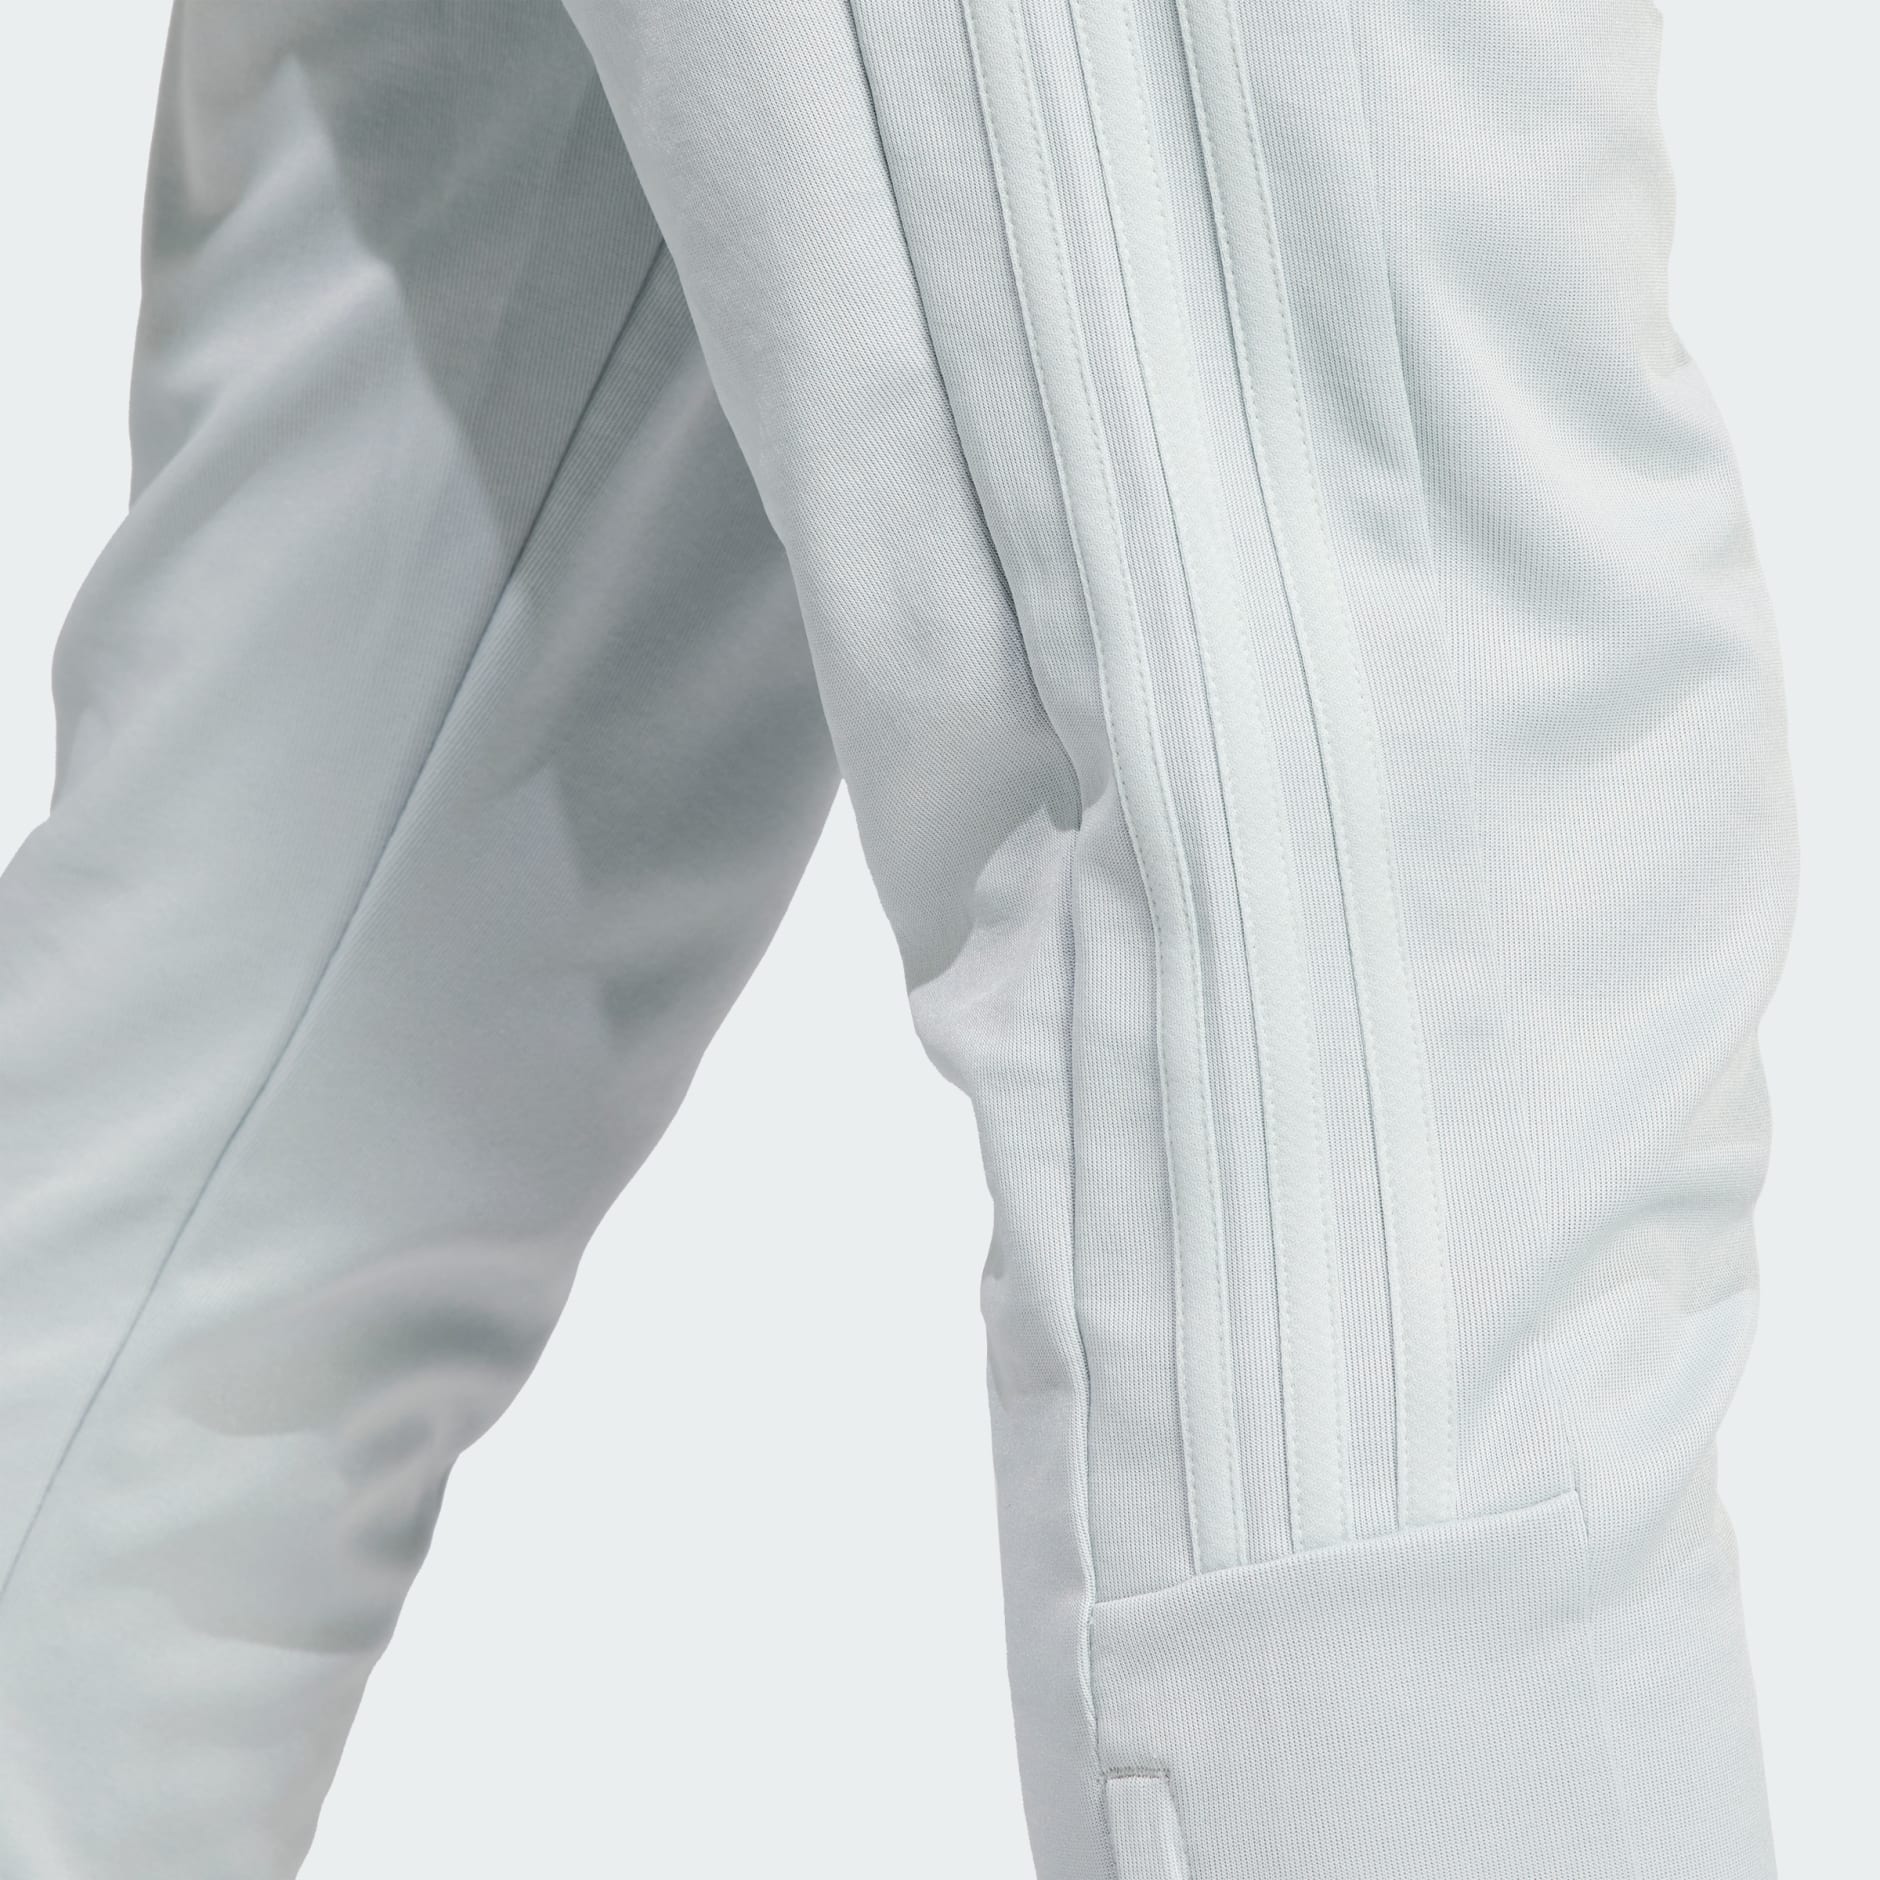 adidas Tiro Reflective Pants - Grey